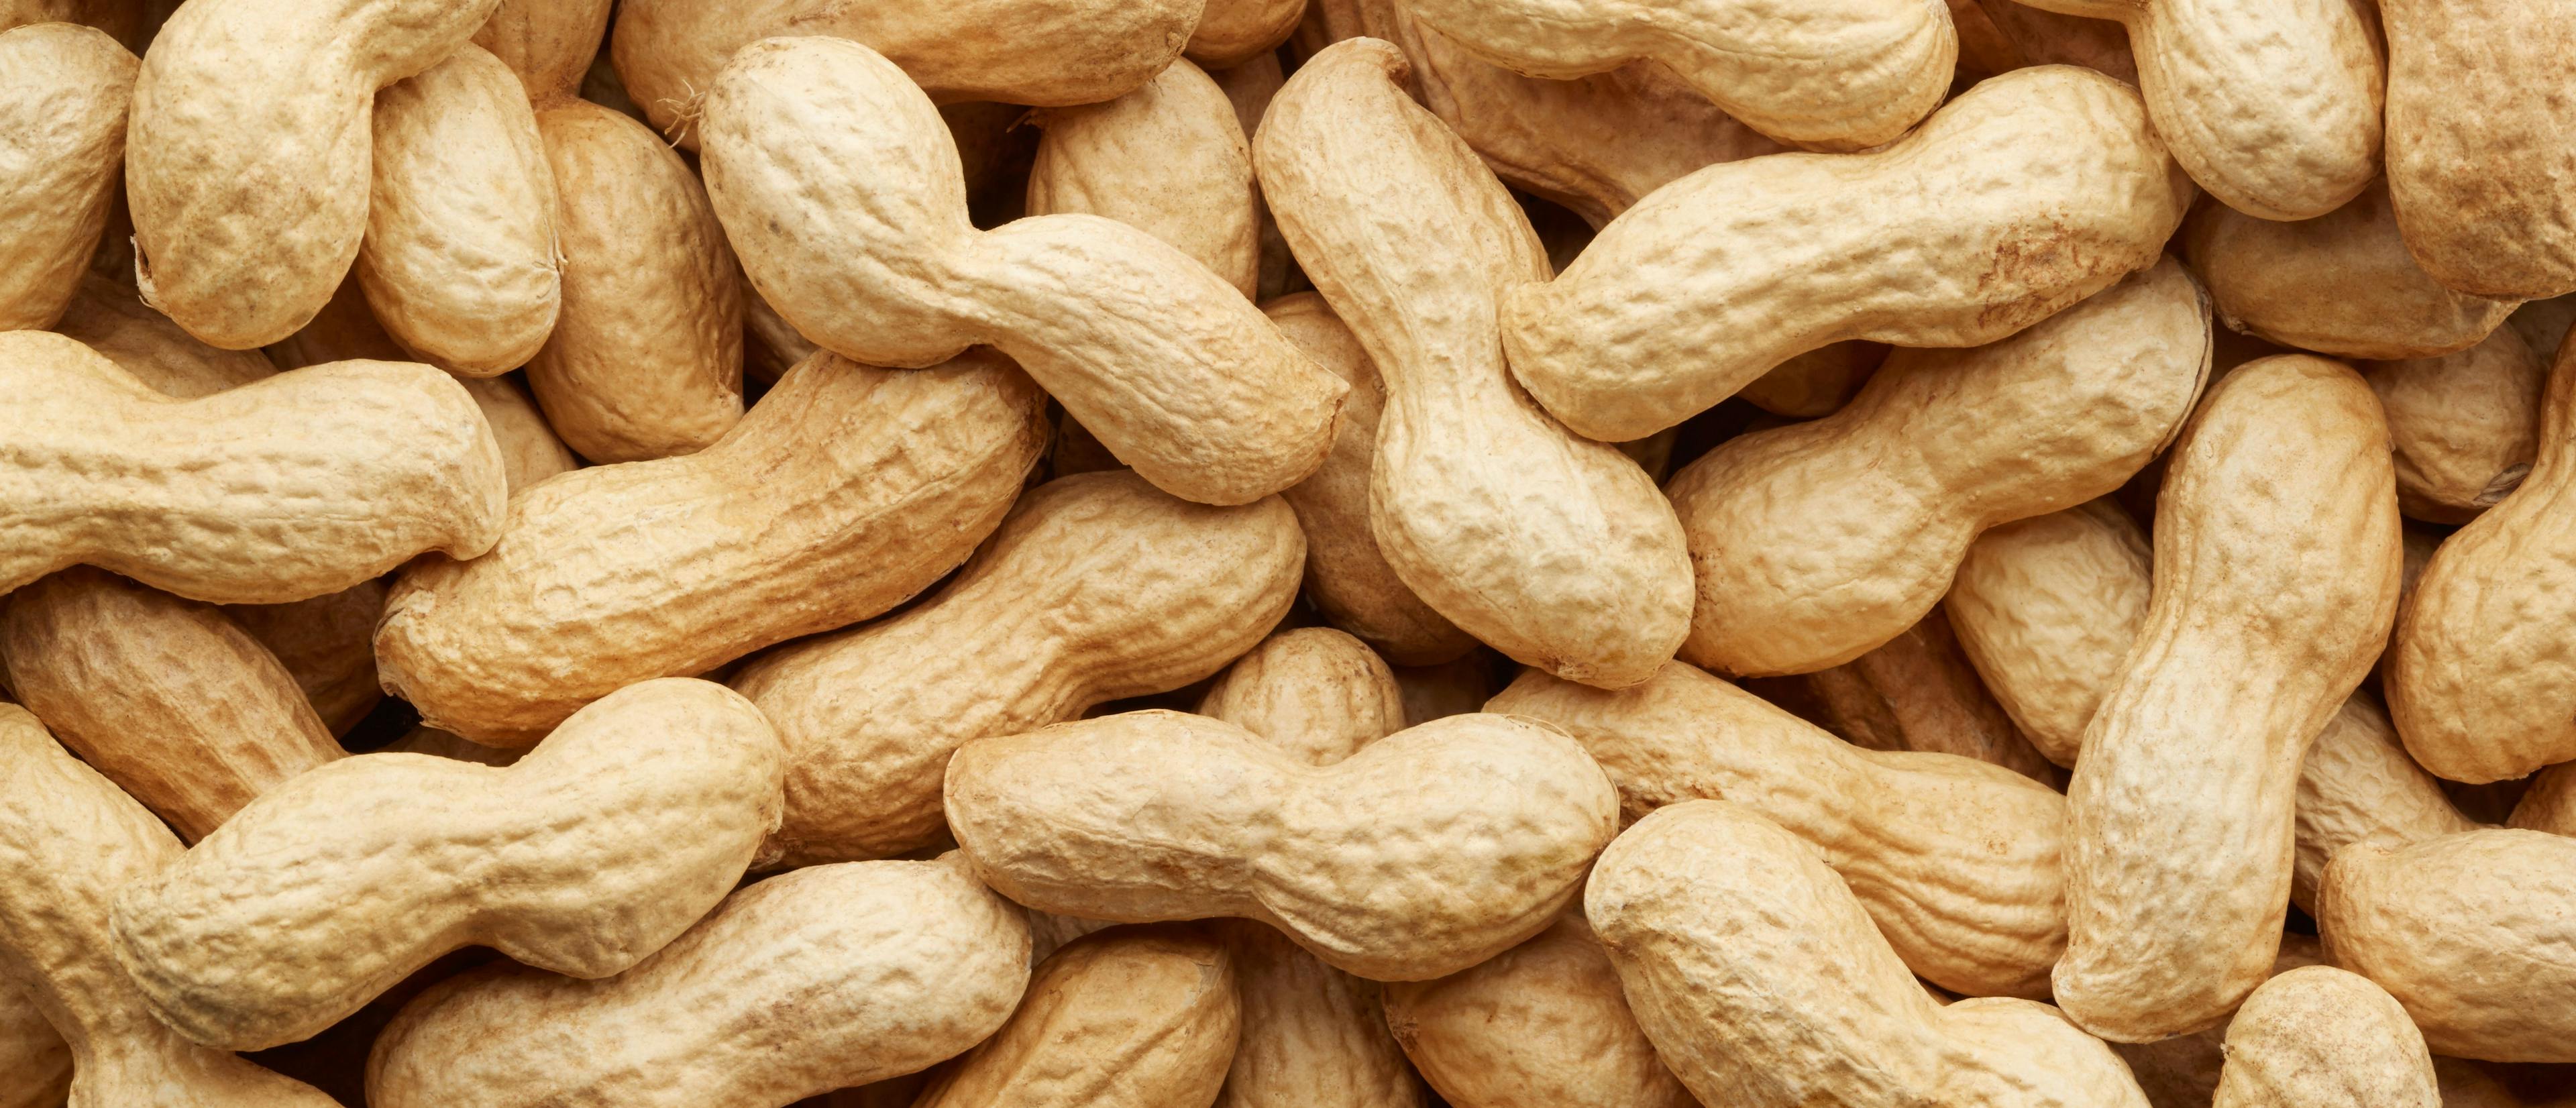 Peanut Consumption Could Prevent Childhood Obesity